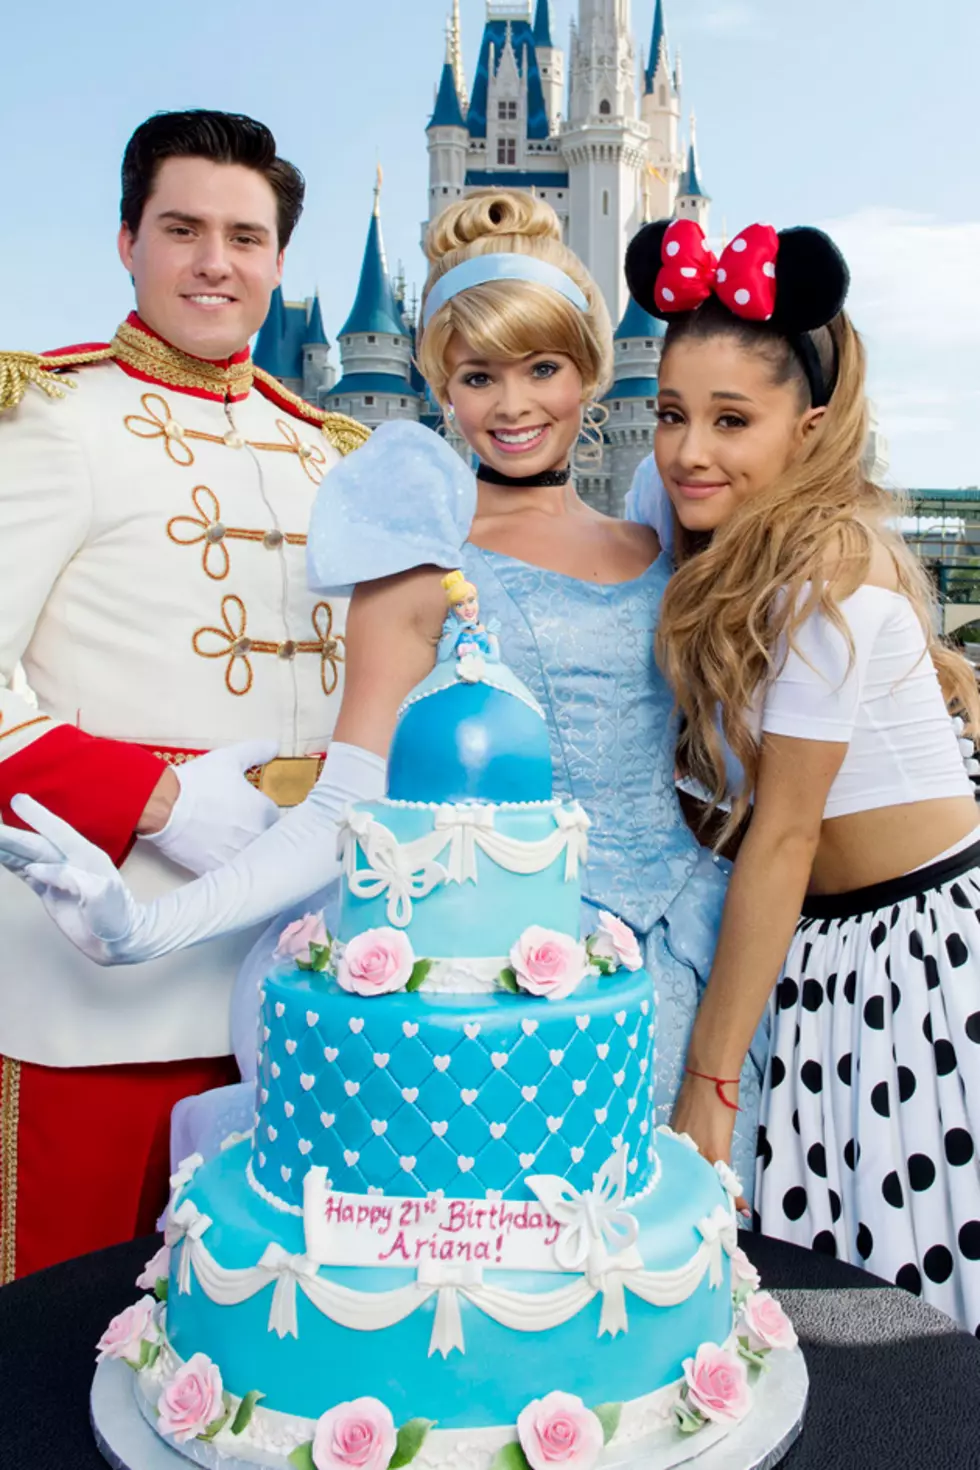 Ariana Grande Celebrates 21st Birthday at Disney World [PHOTOS]